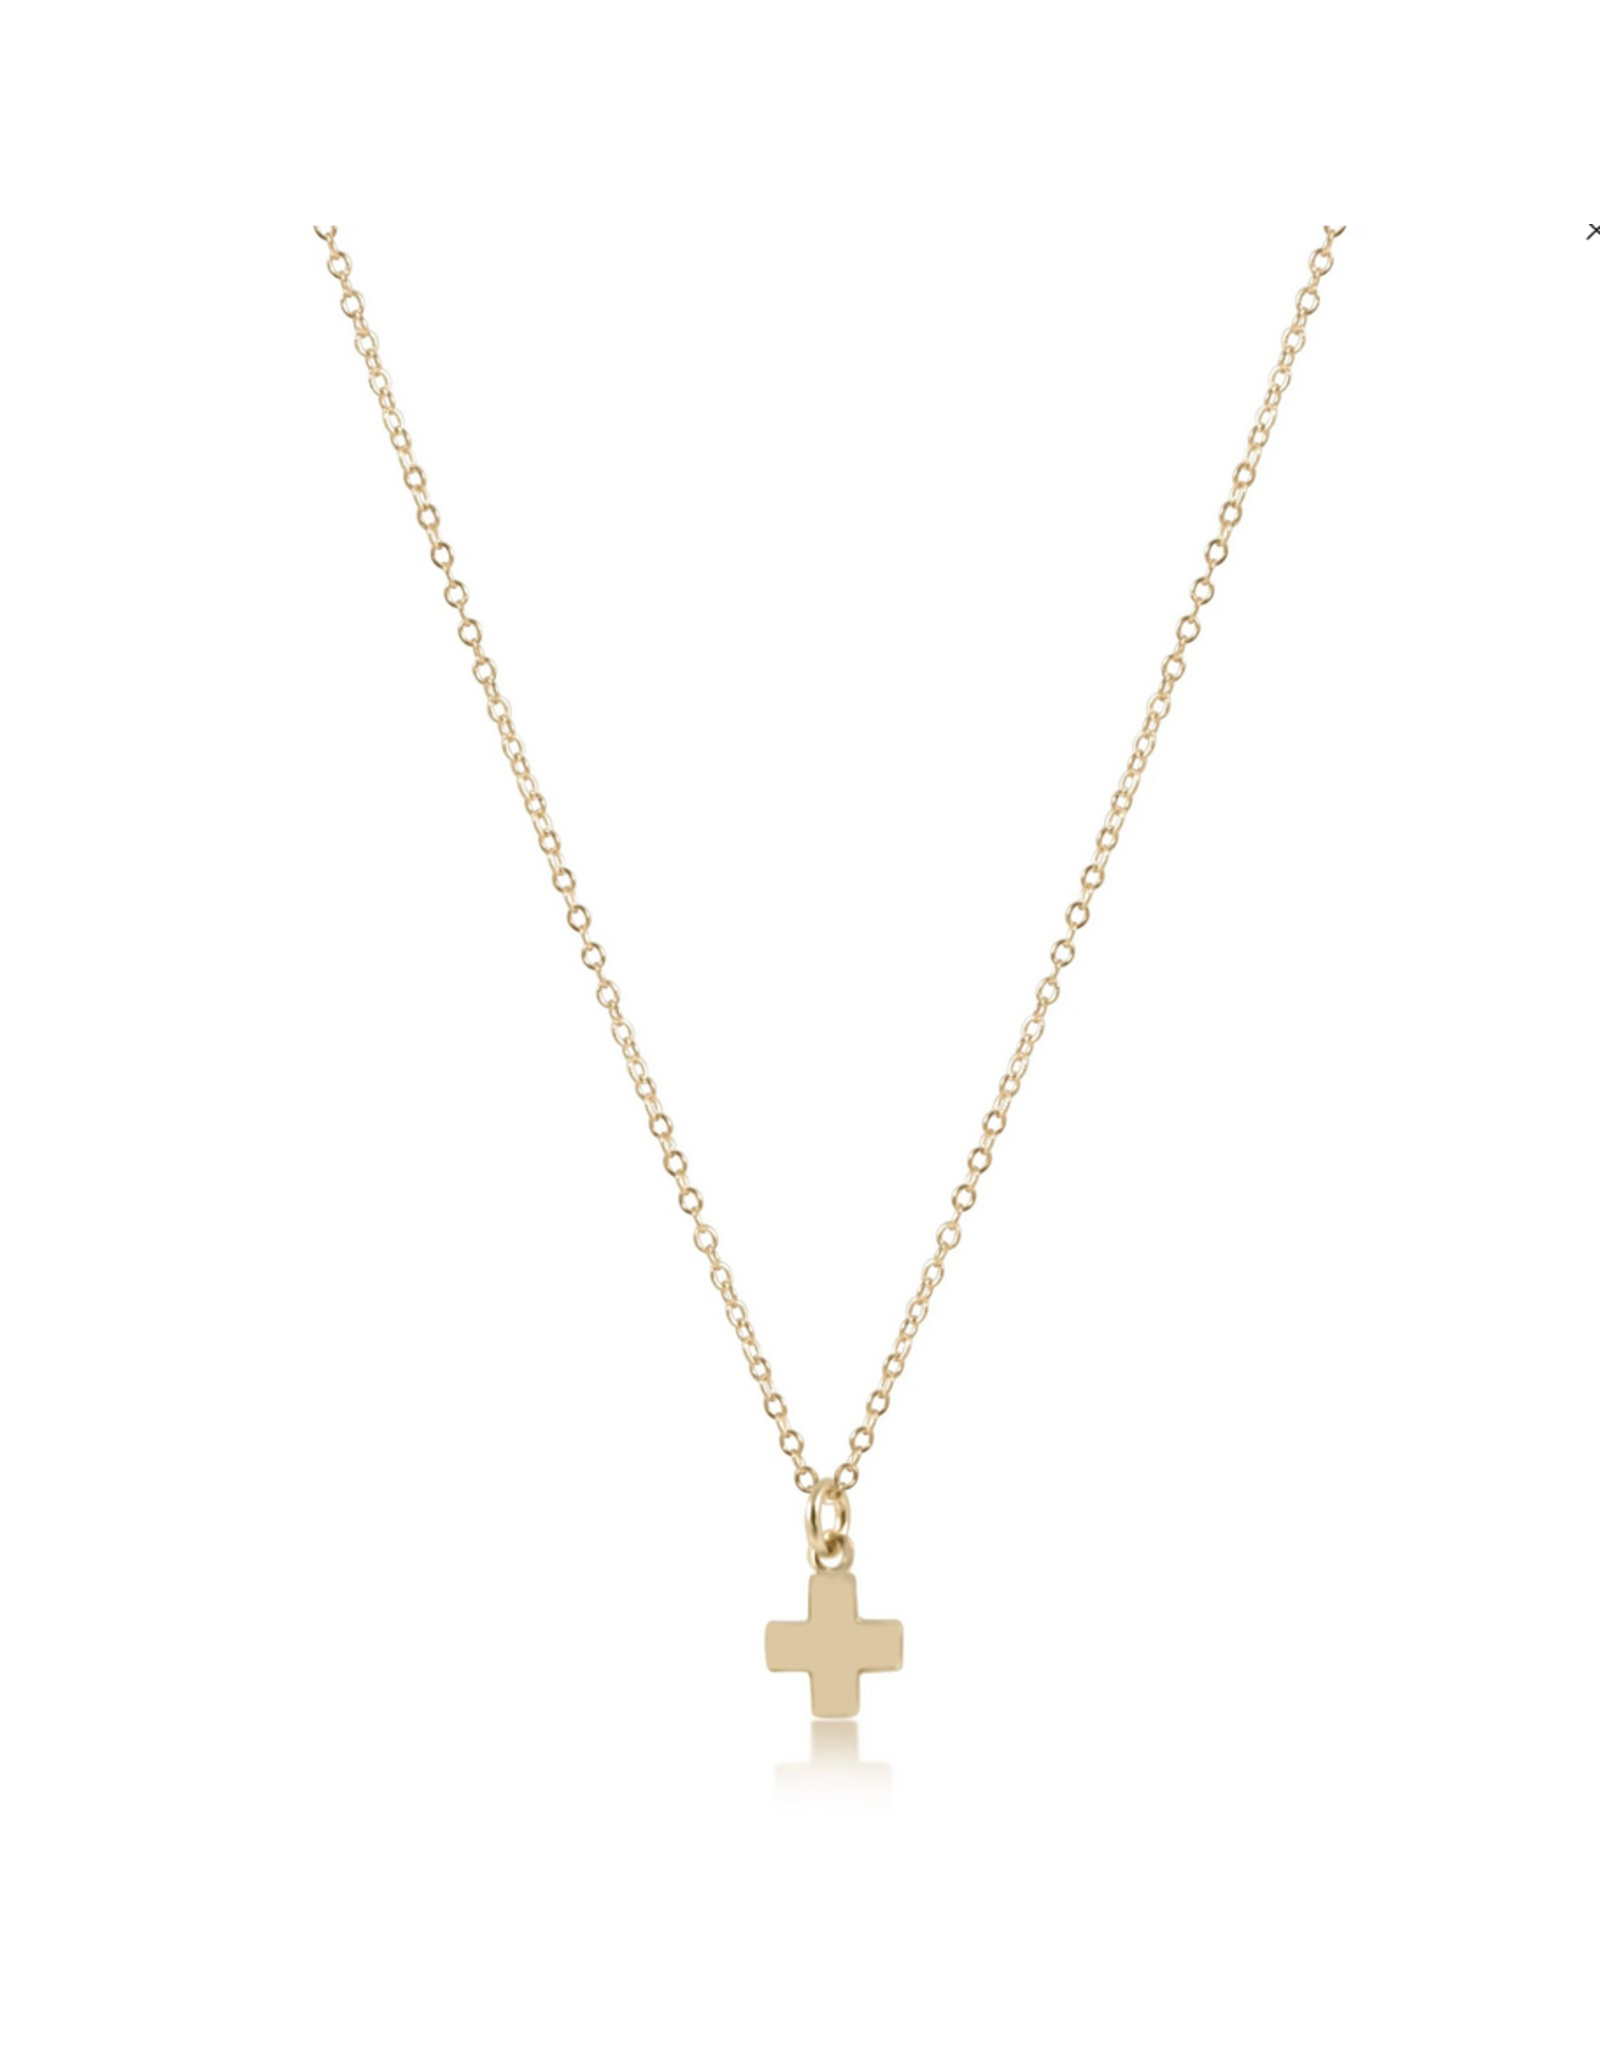 Buy Tiny Cross Necklace, Gold Cross Necklace, Cross Necklace, Dainty  Necklace, Dainty Cross Necklace, Small Cross Necklace, Delicate Necklace  Online in India - Etsy